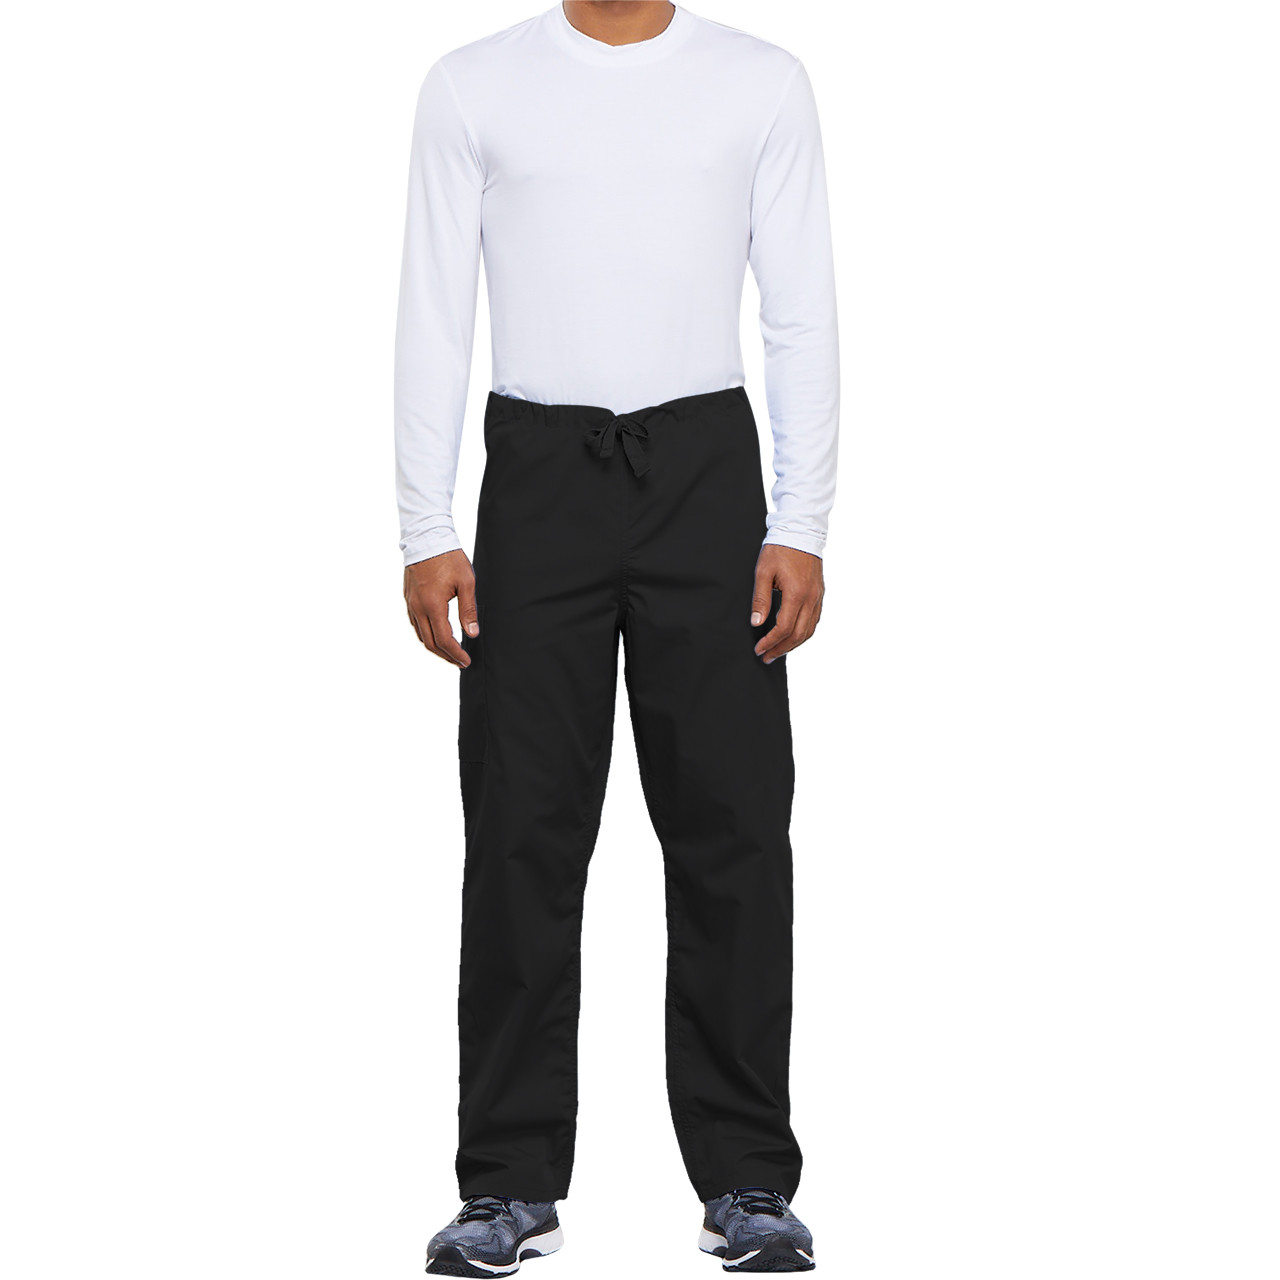 Drawstring Scrub Pants [PA315-4100-BLACK] - FlynnO'Hara Uniforms